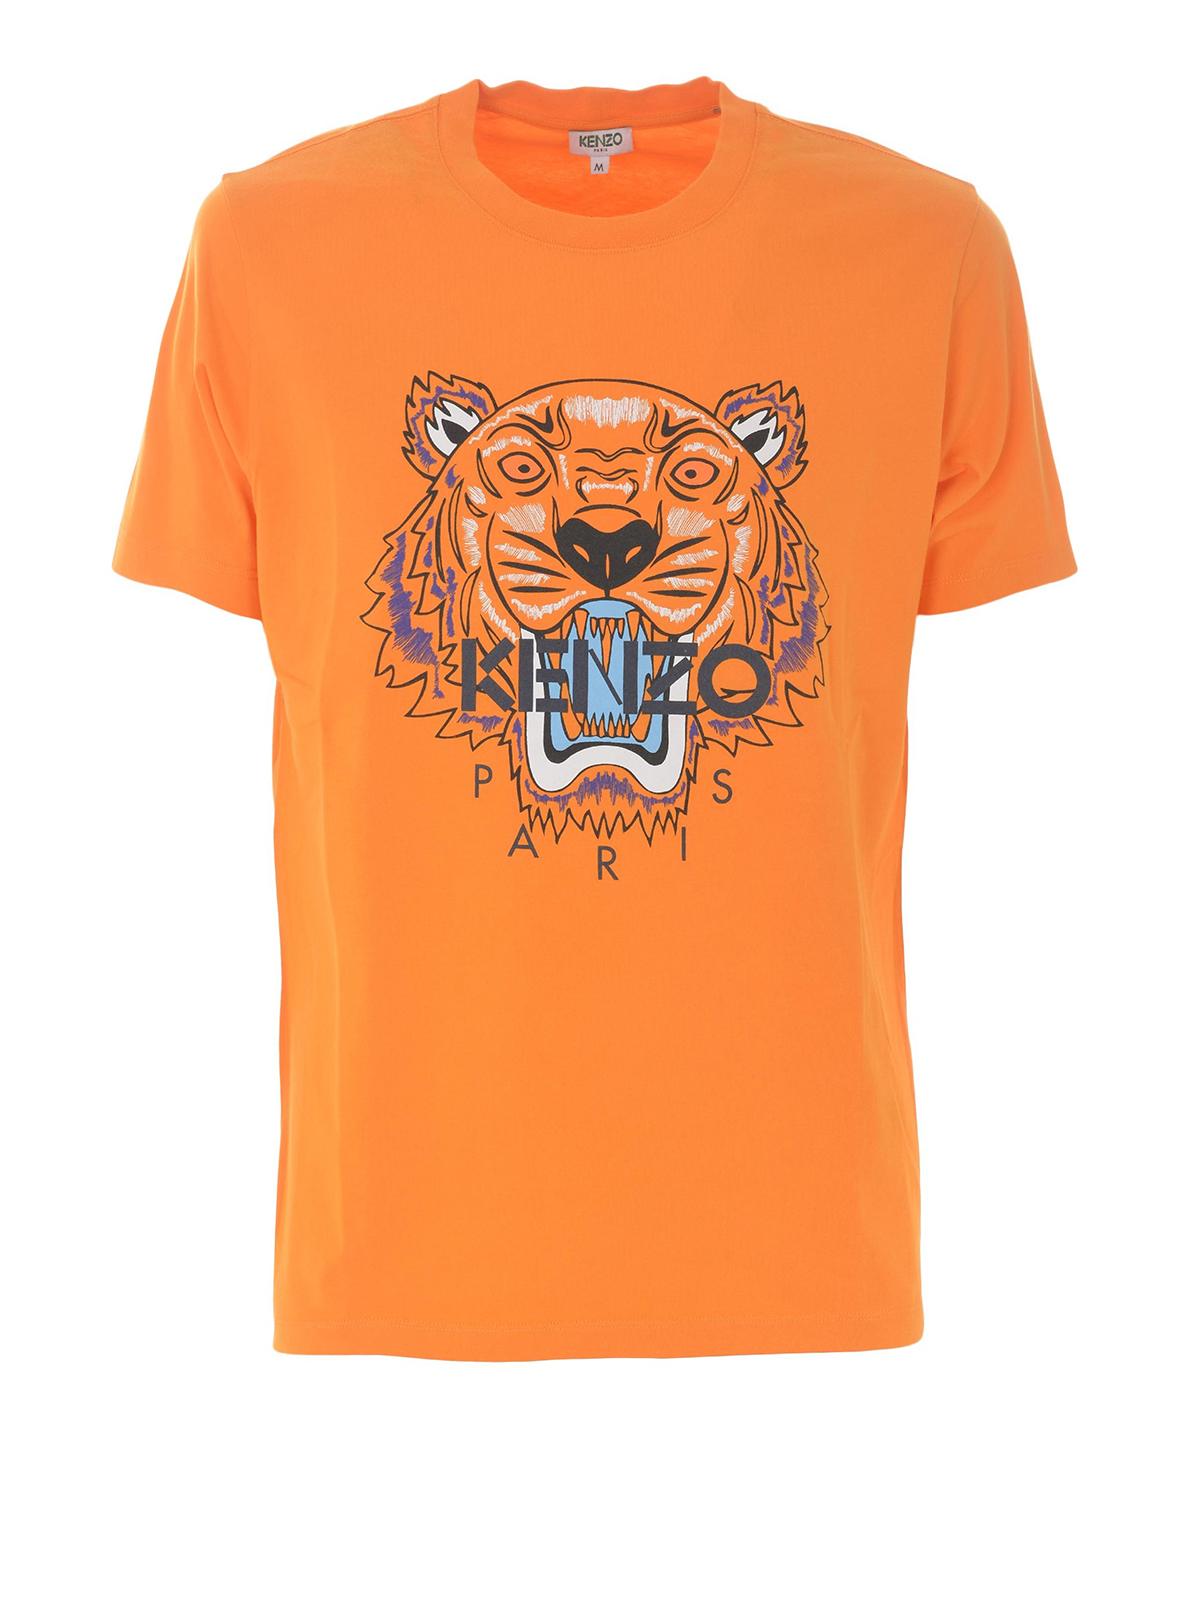 orange kenzo t shirt